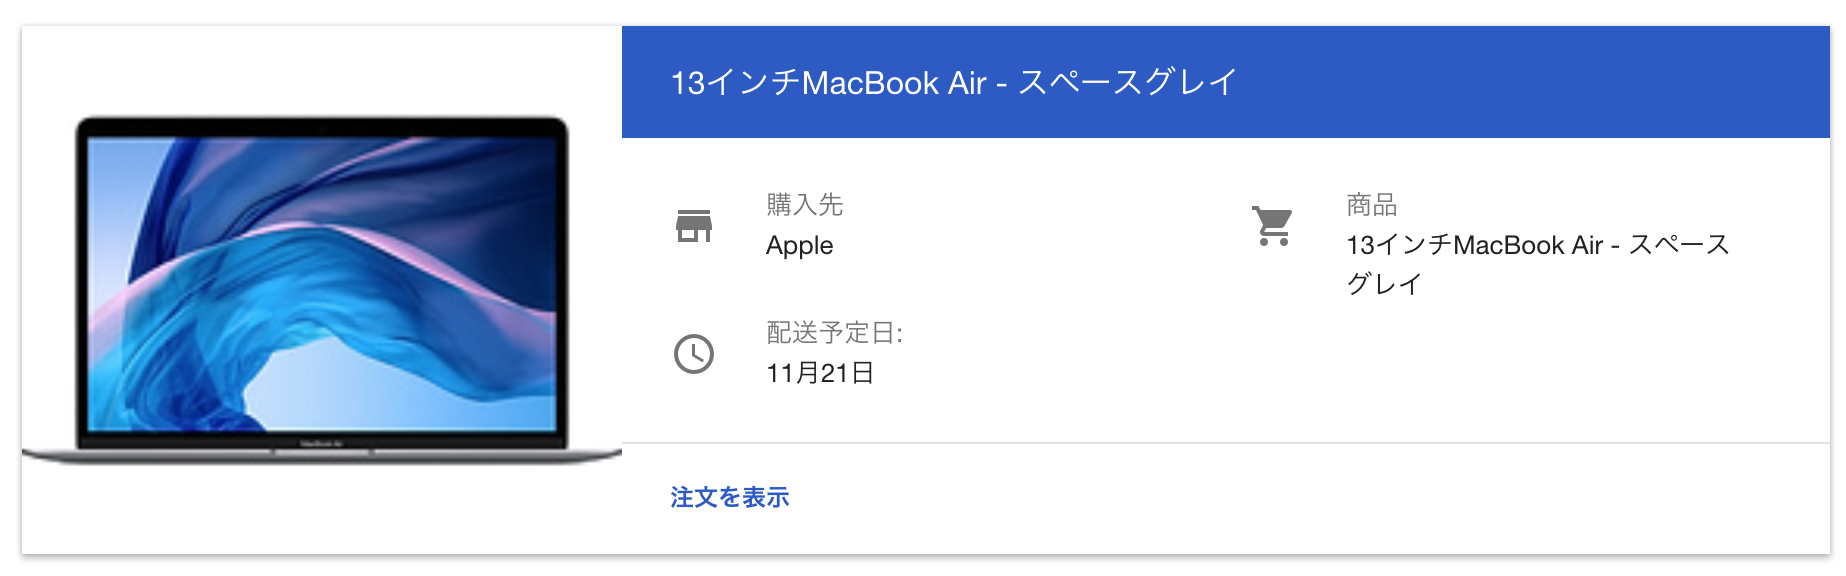 MacBook Air注文